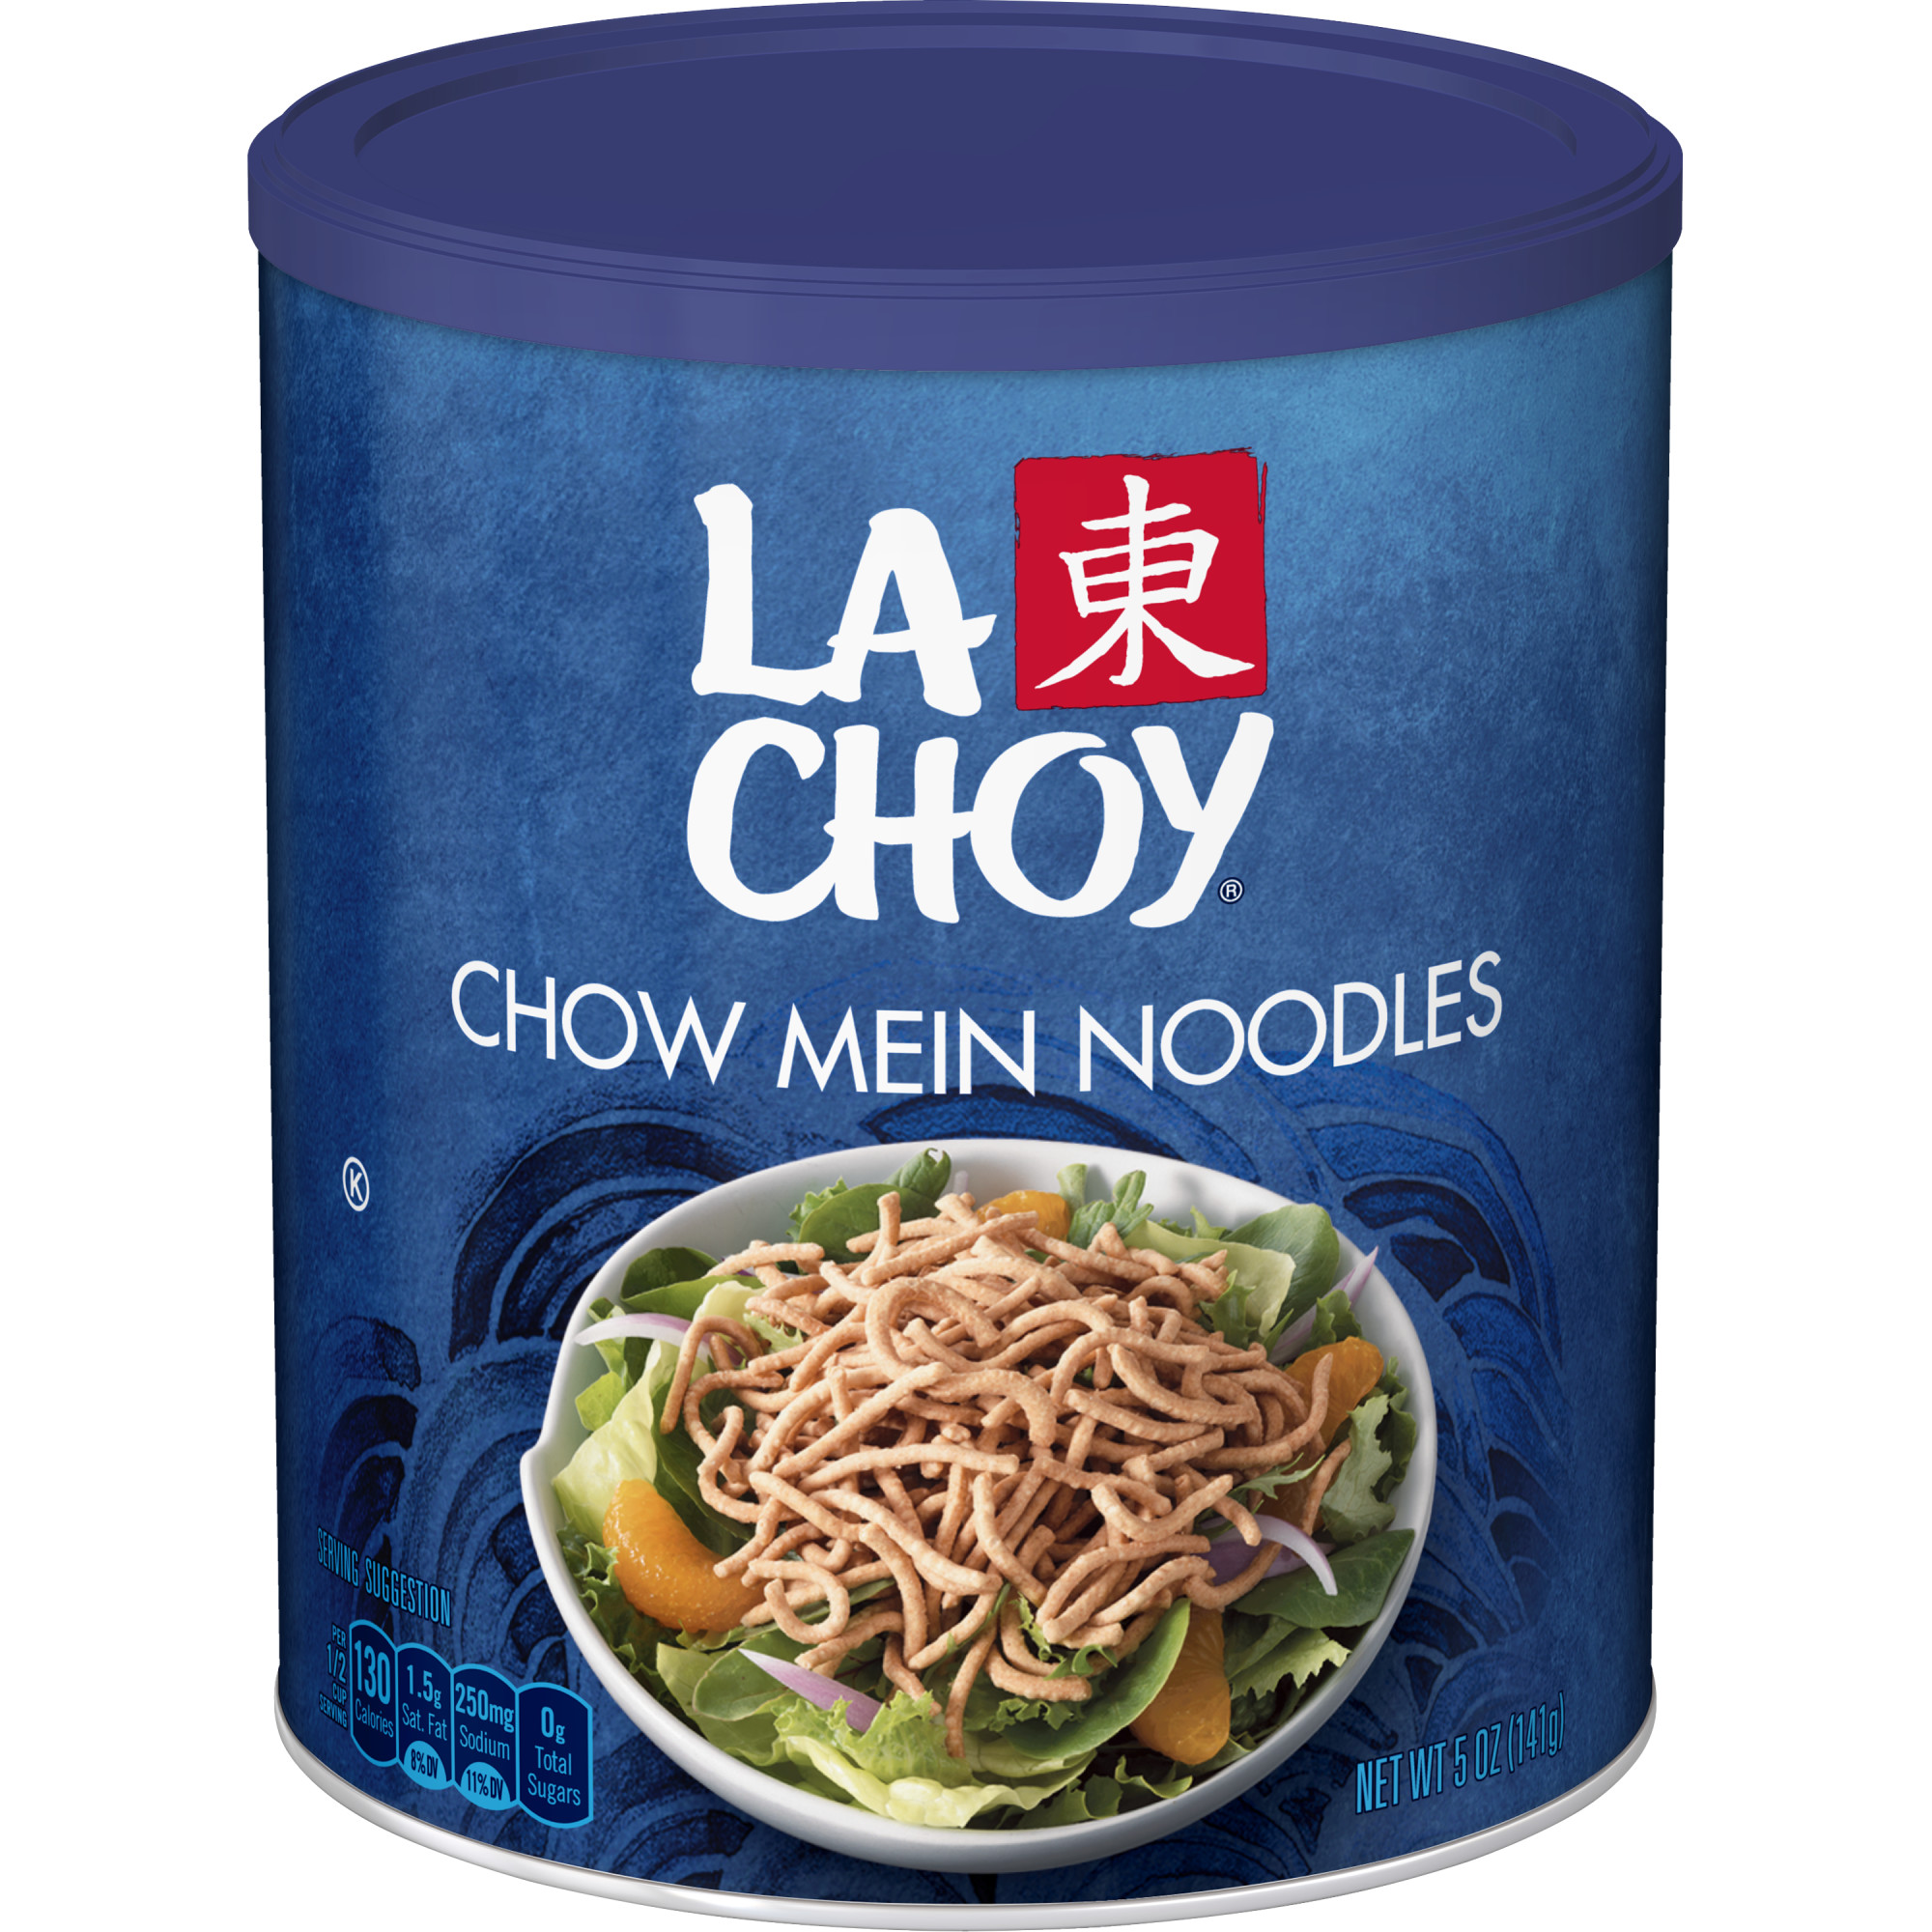 La Choy Chow Mein Noodles, 5 oz Can - image 1 of 5